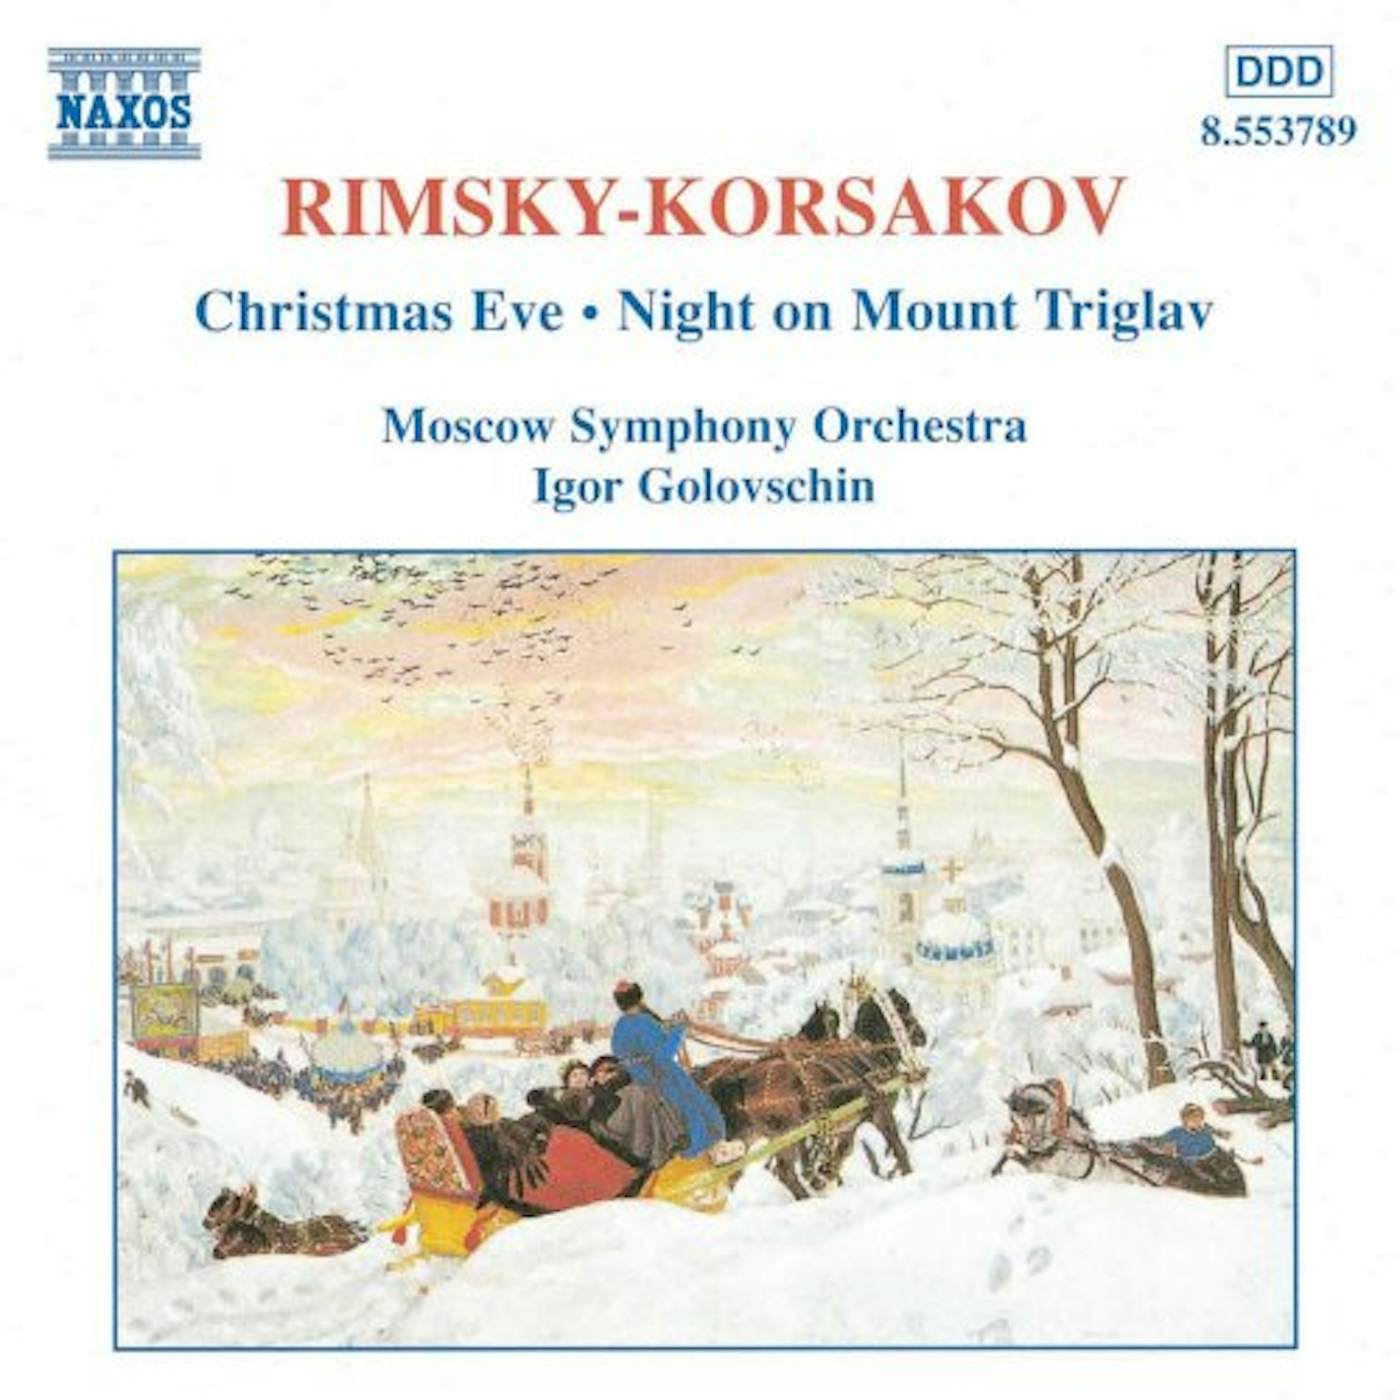 Rimsky-Korsakov CHRISTMAS EVE CD